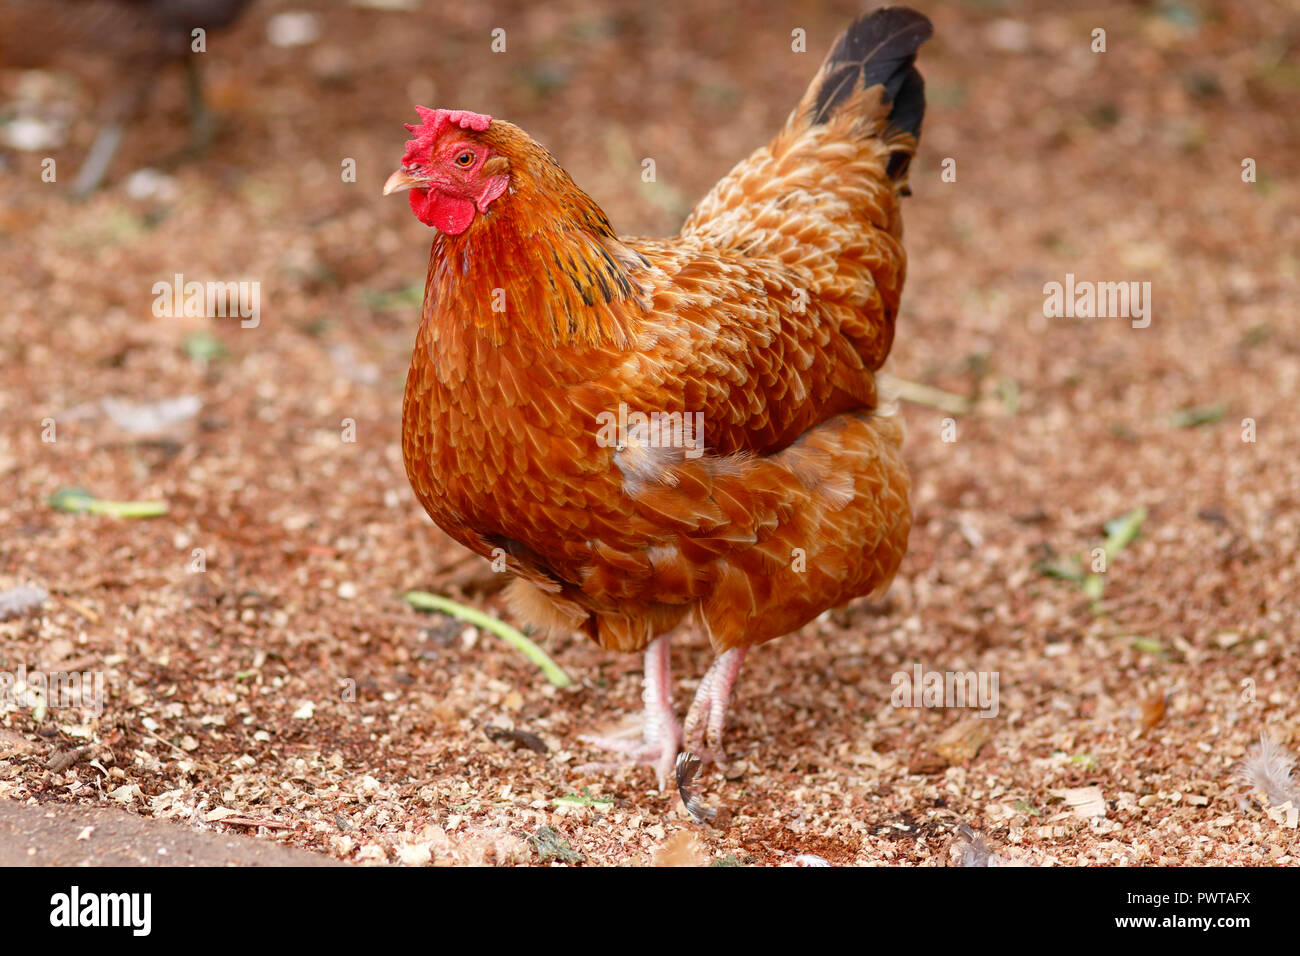 A Rhode Island red Hen Chicken Foto Stock